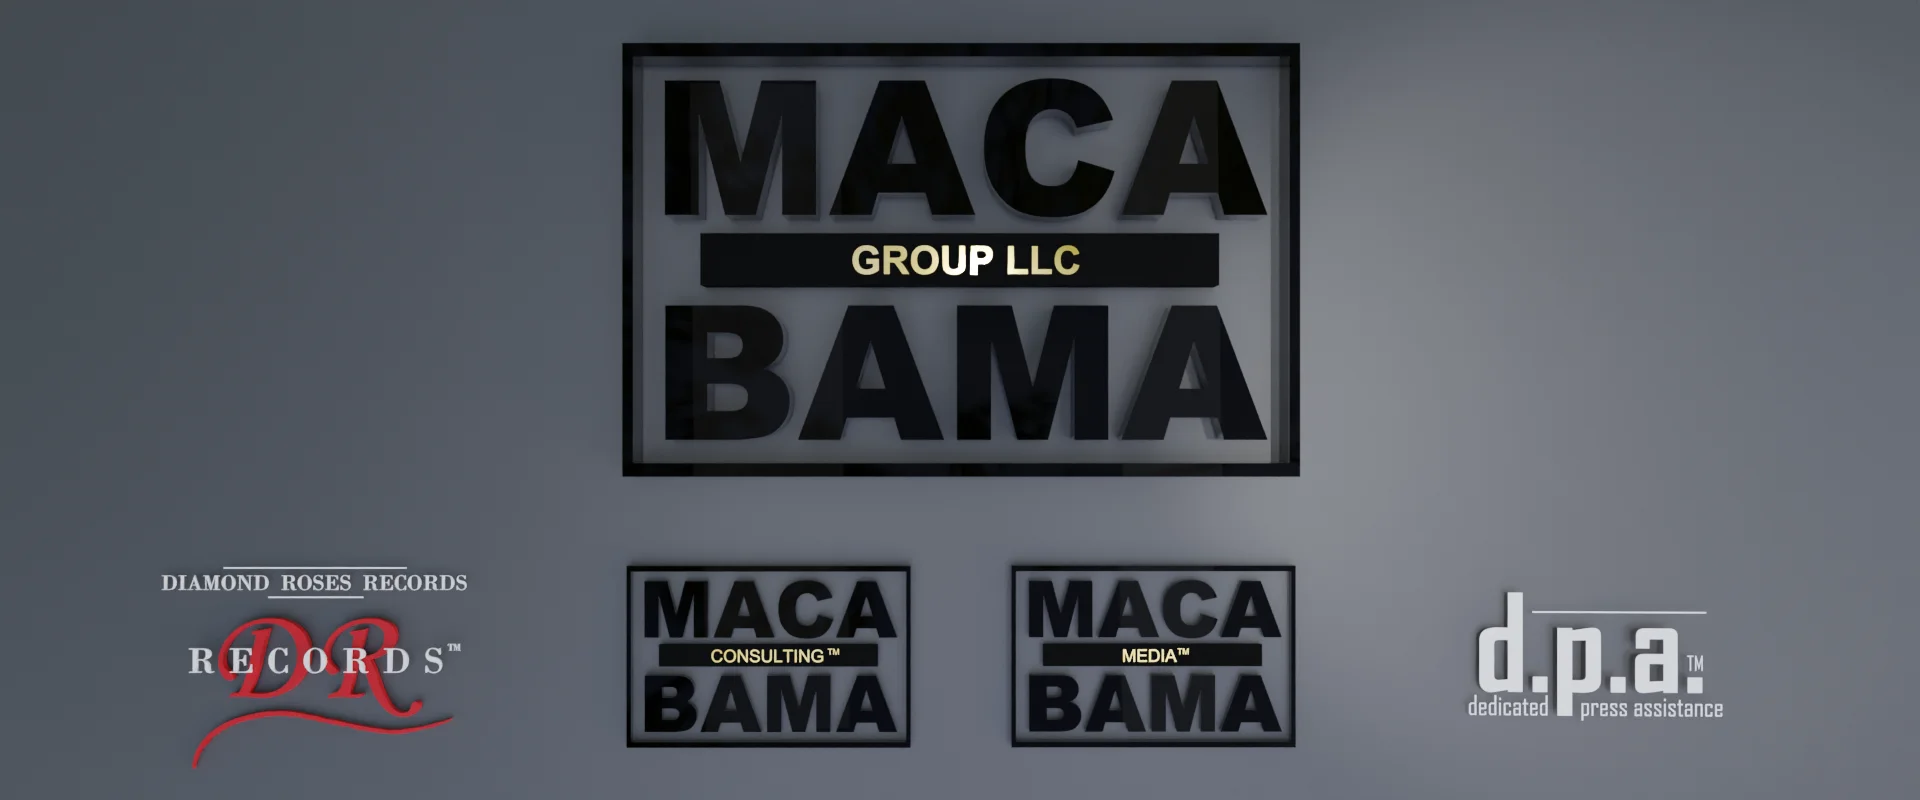 Macabama Group LLC